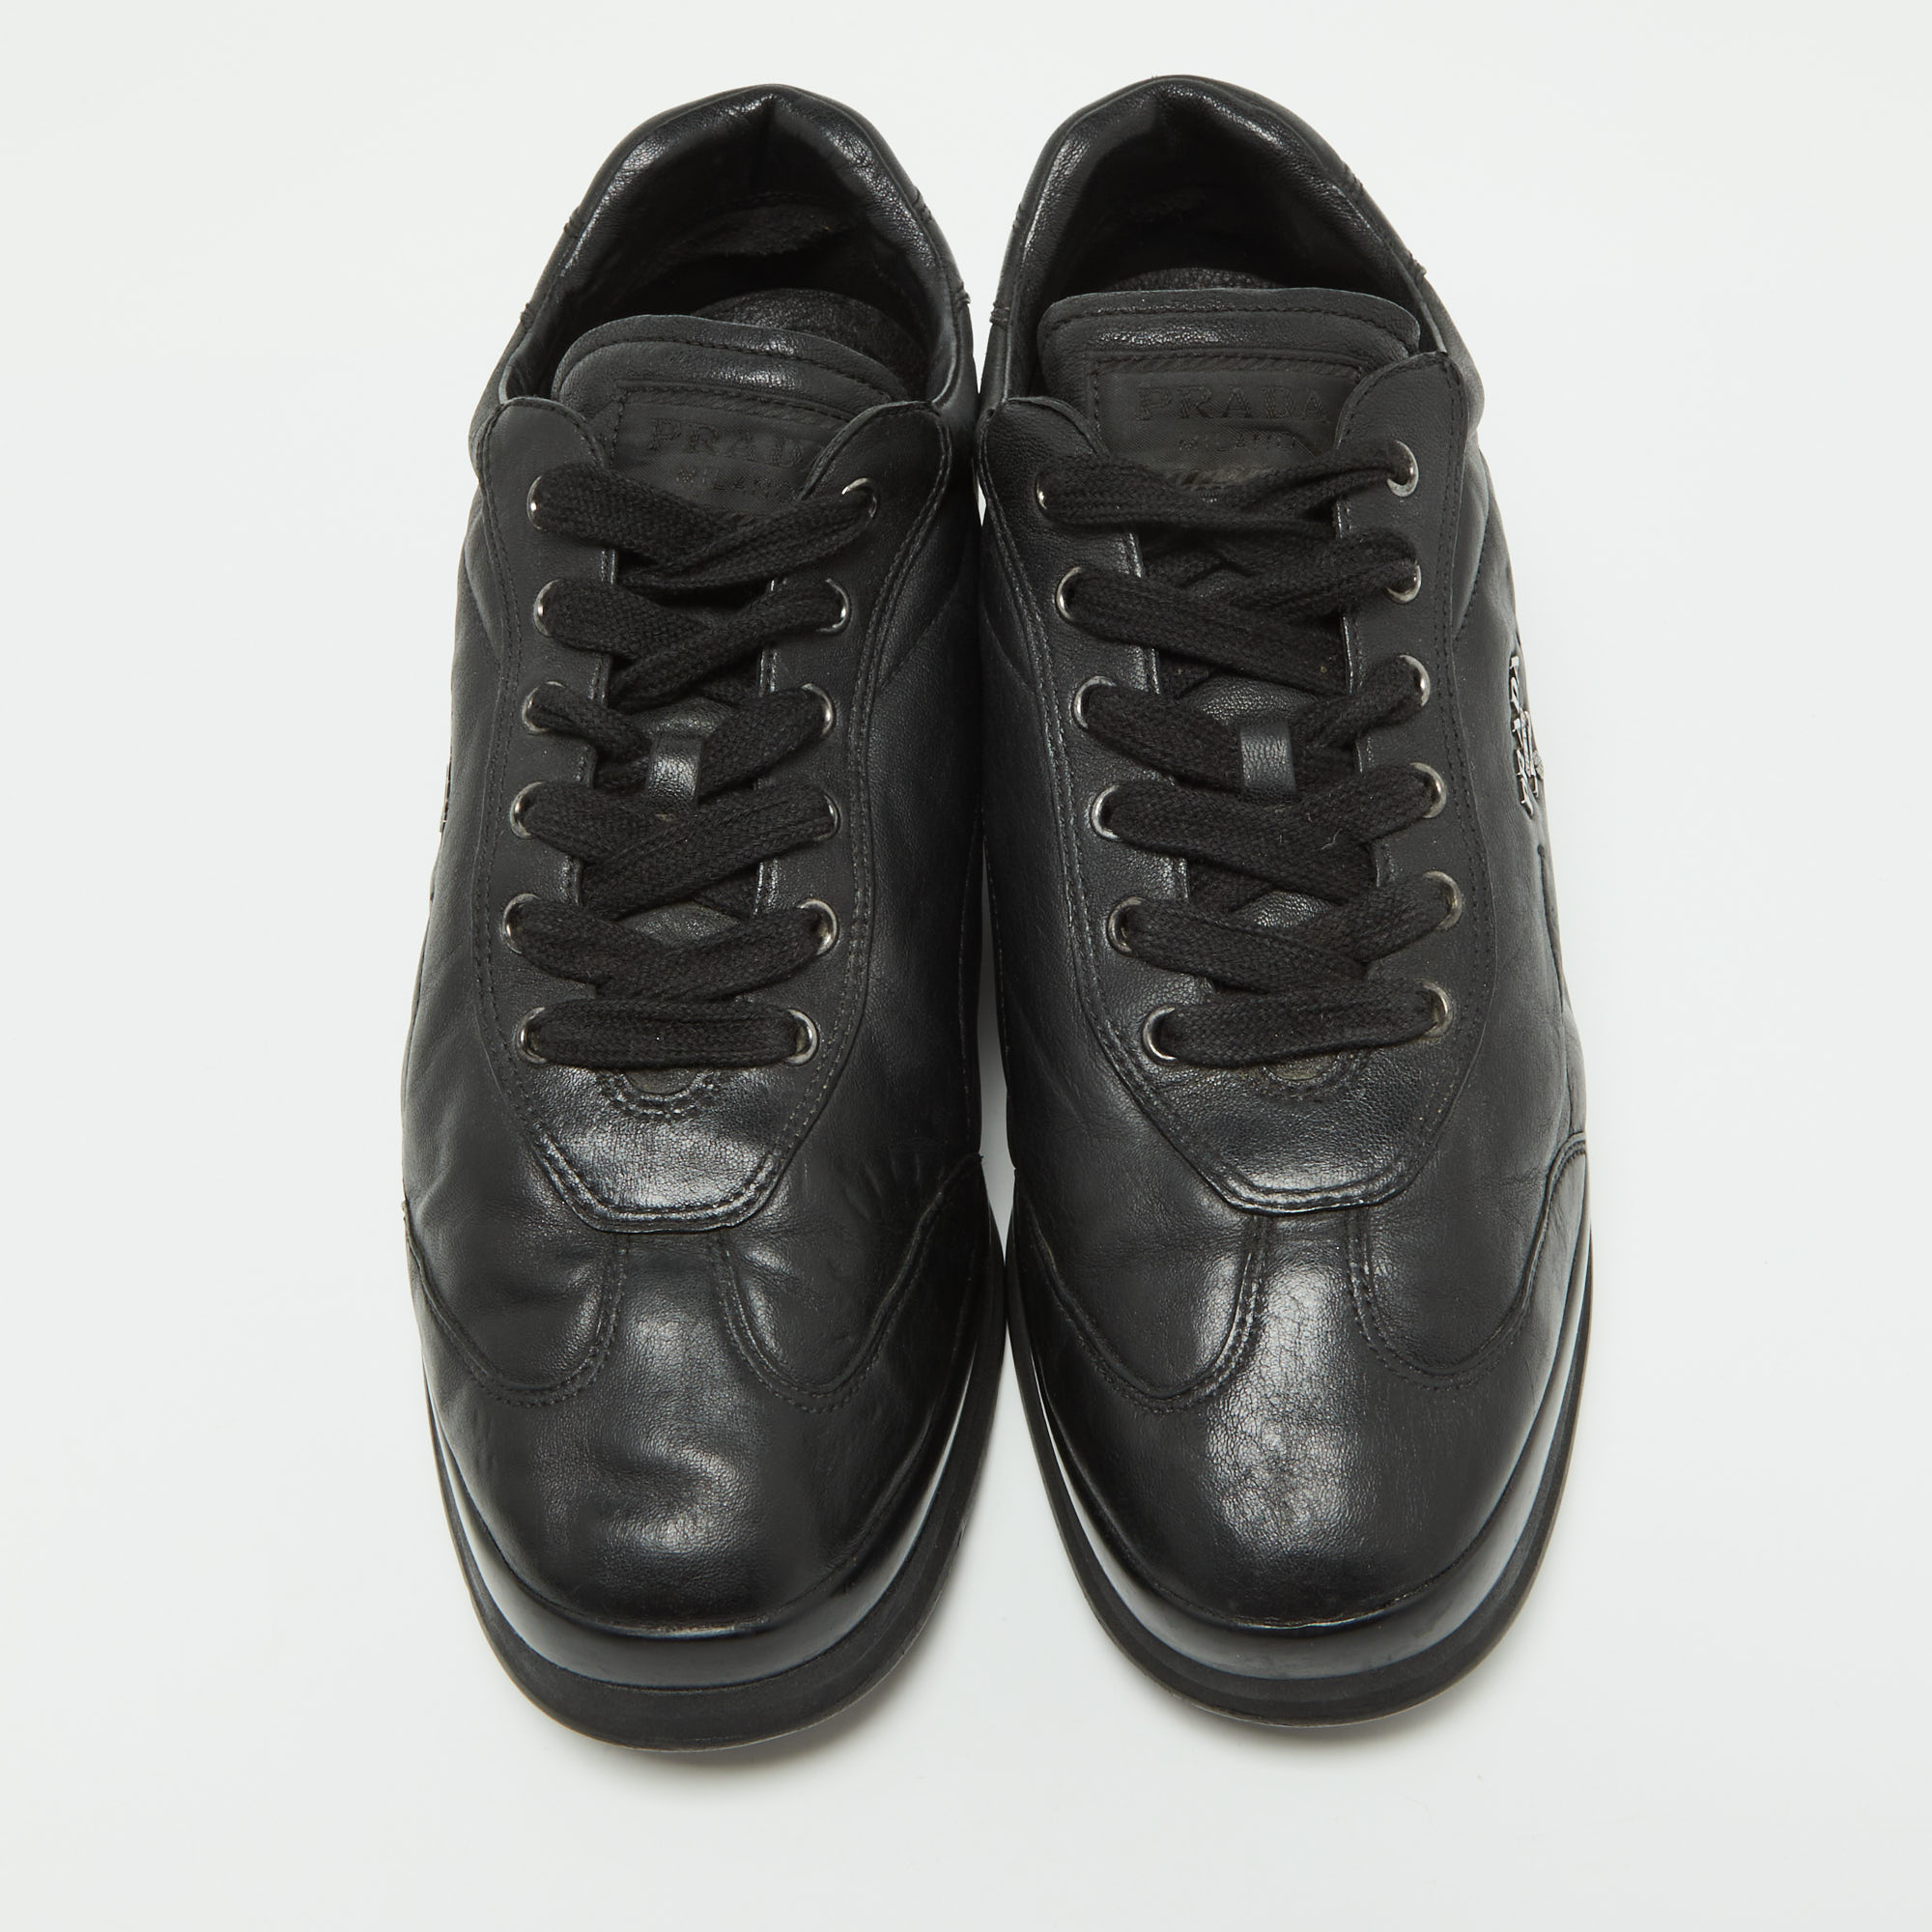 Prada Black Leather Low Top Sneakers Size 40.5